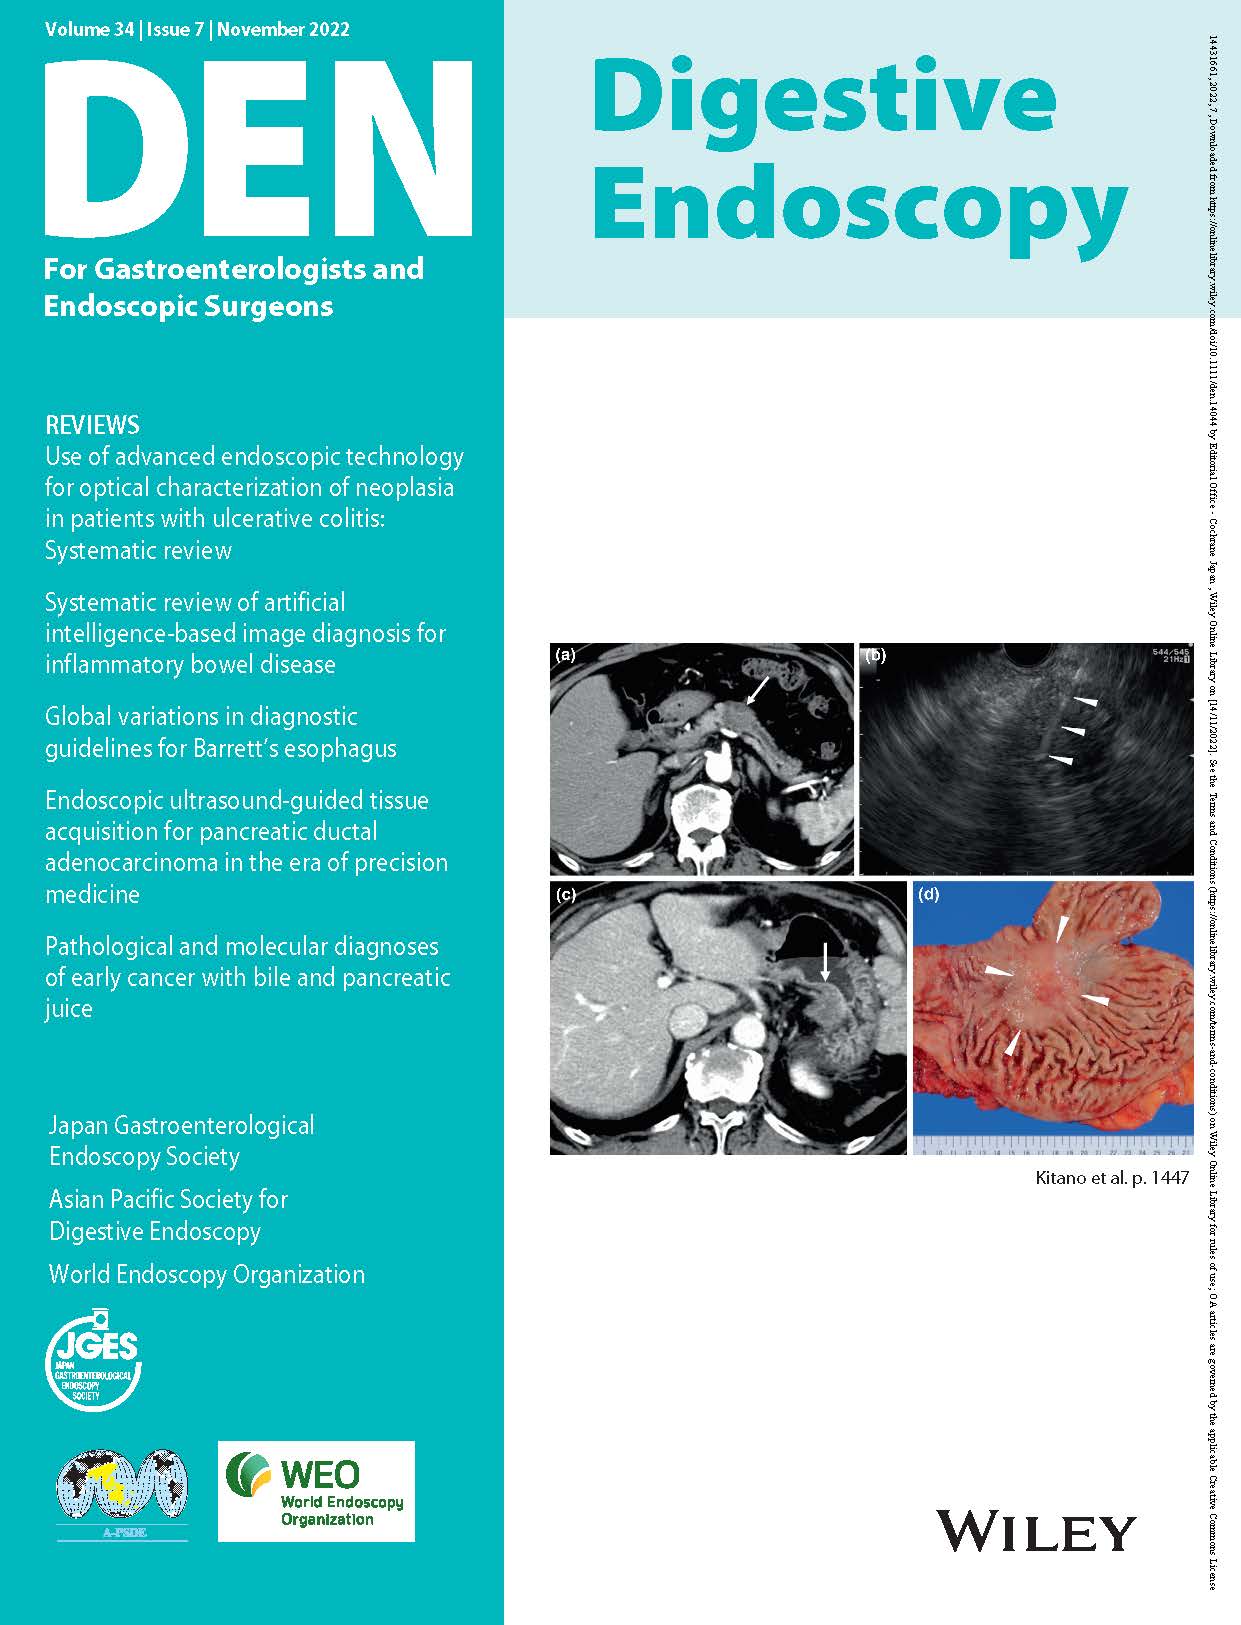 Digestive Endoscopy Vol34-7